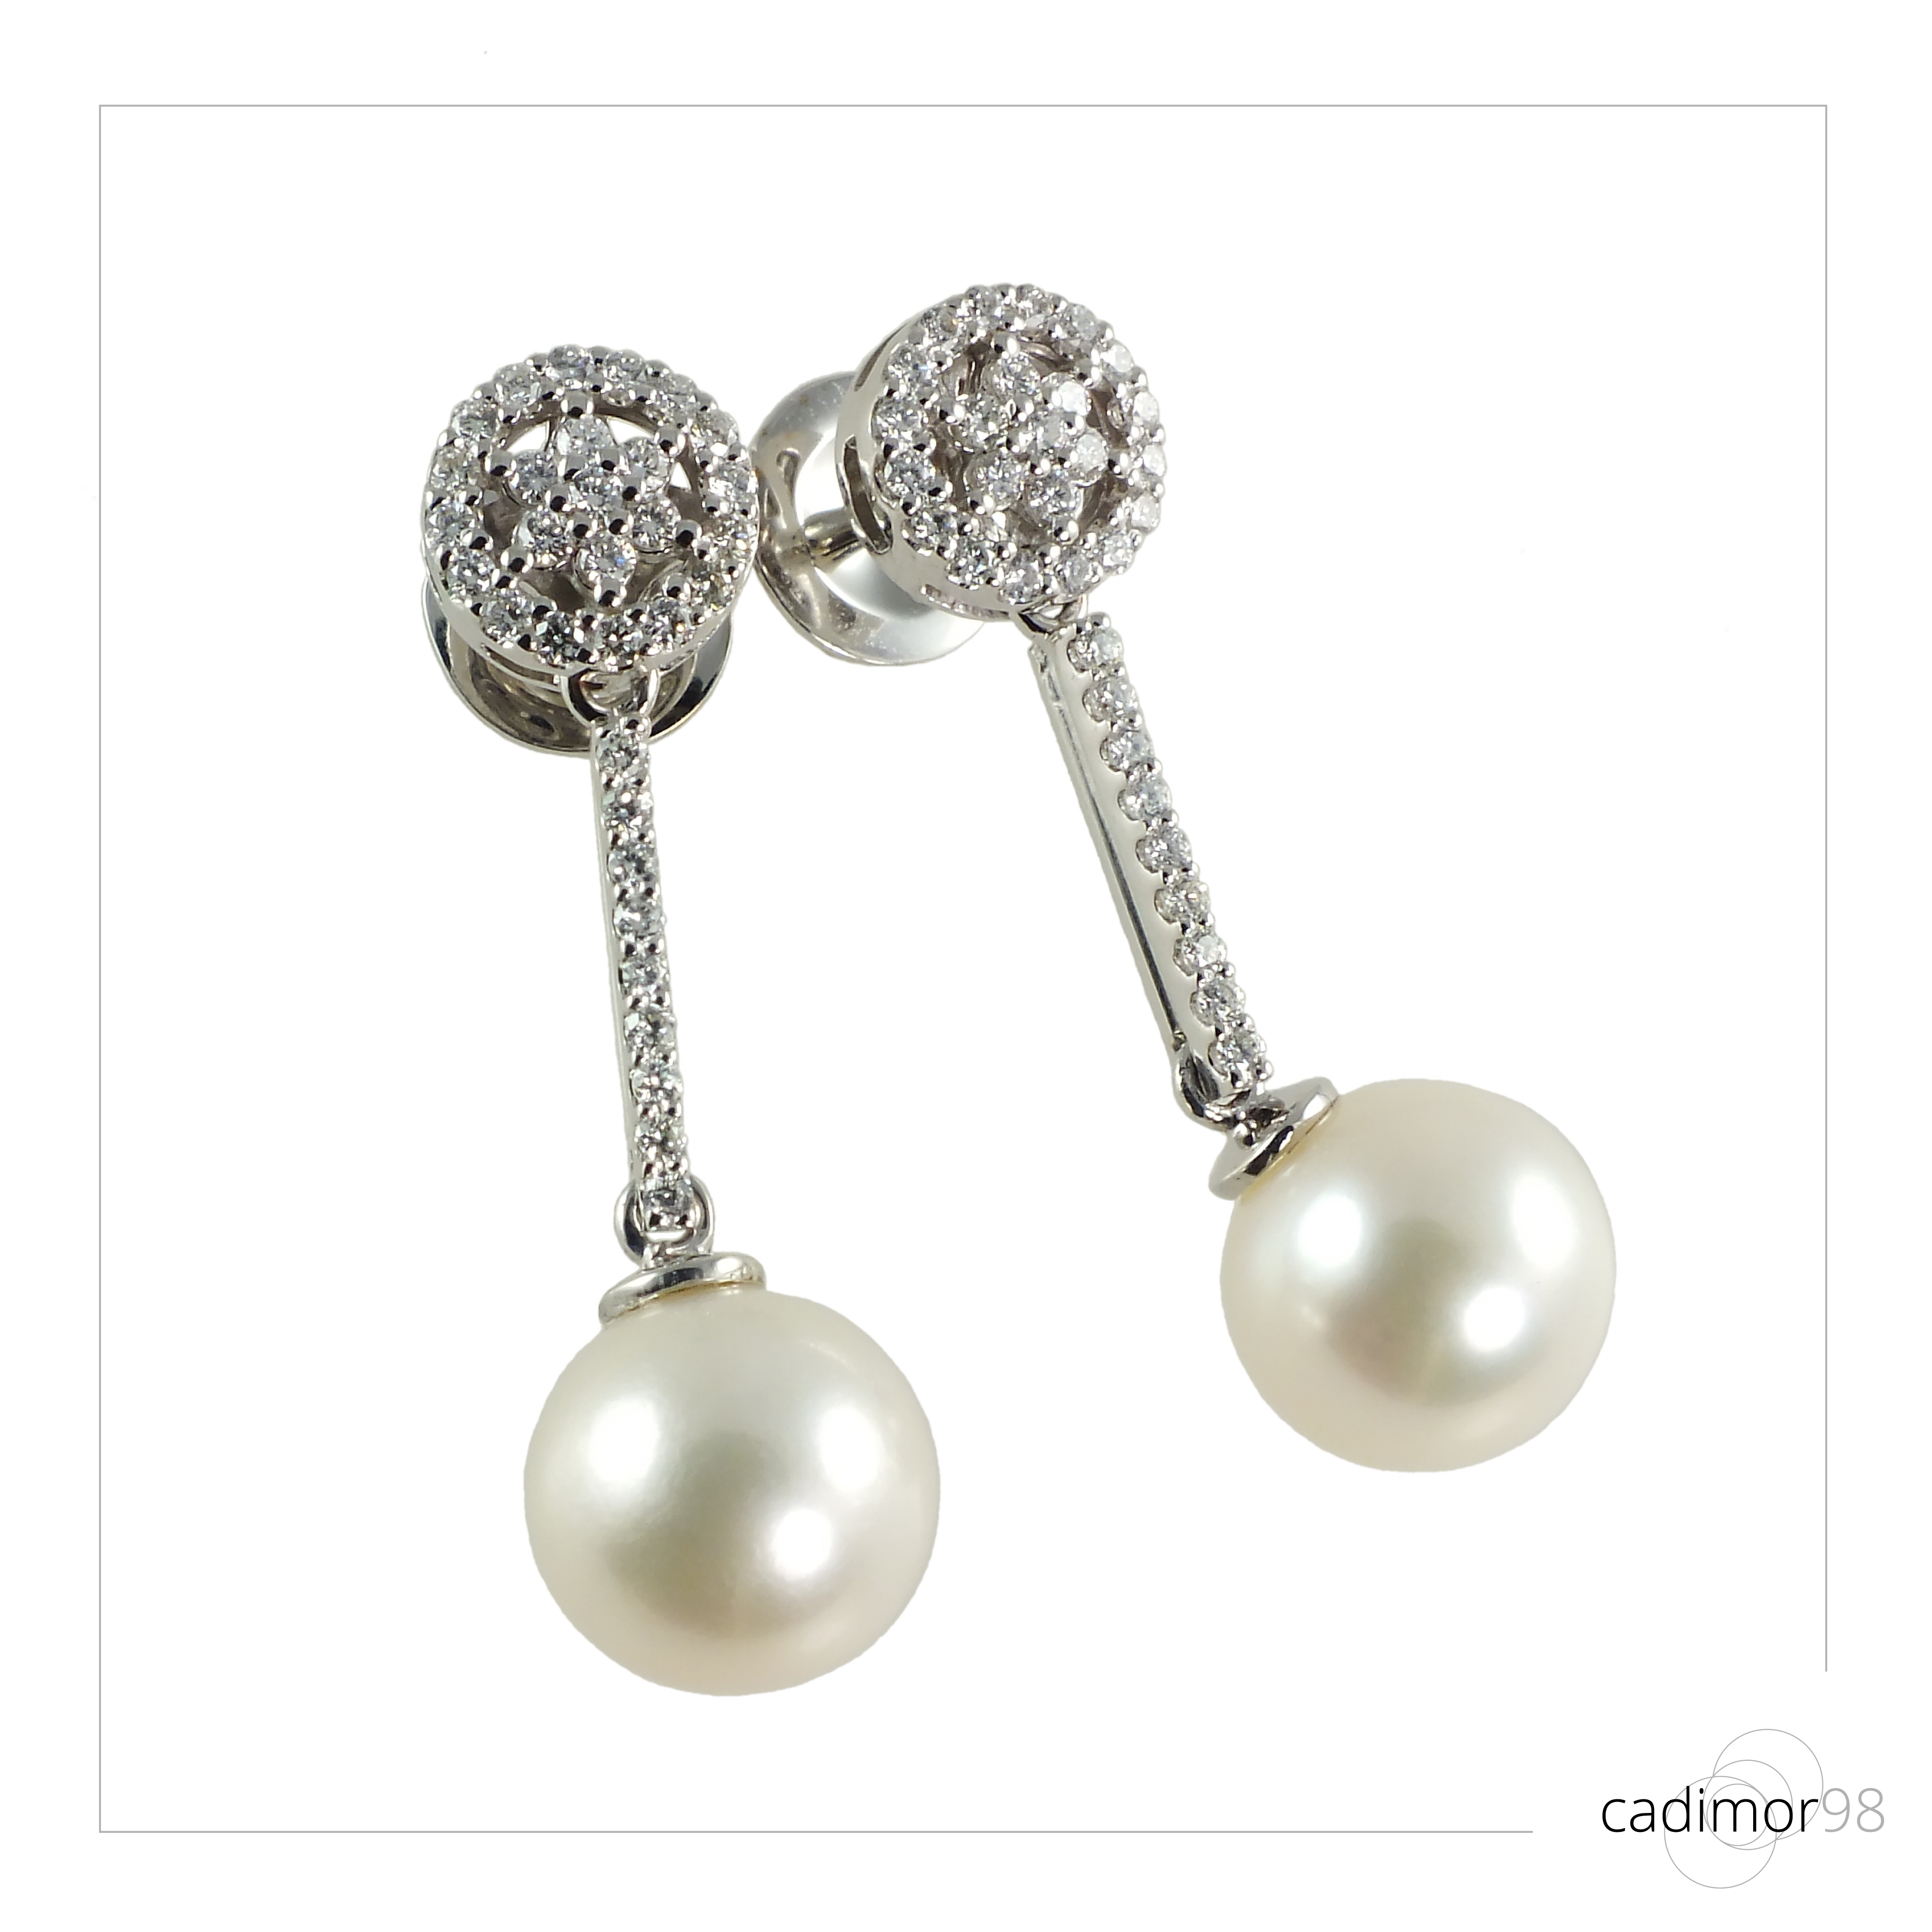 pendientes oro blanco perlas cadimor 98